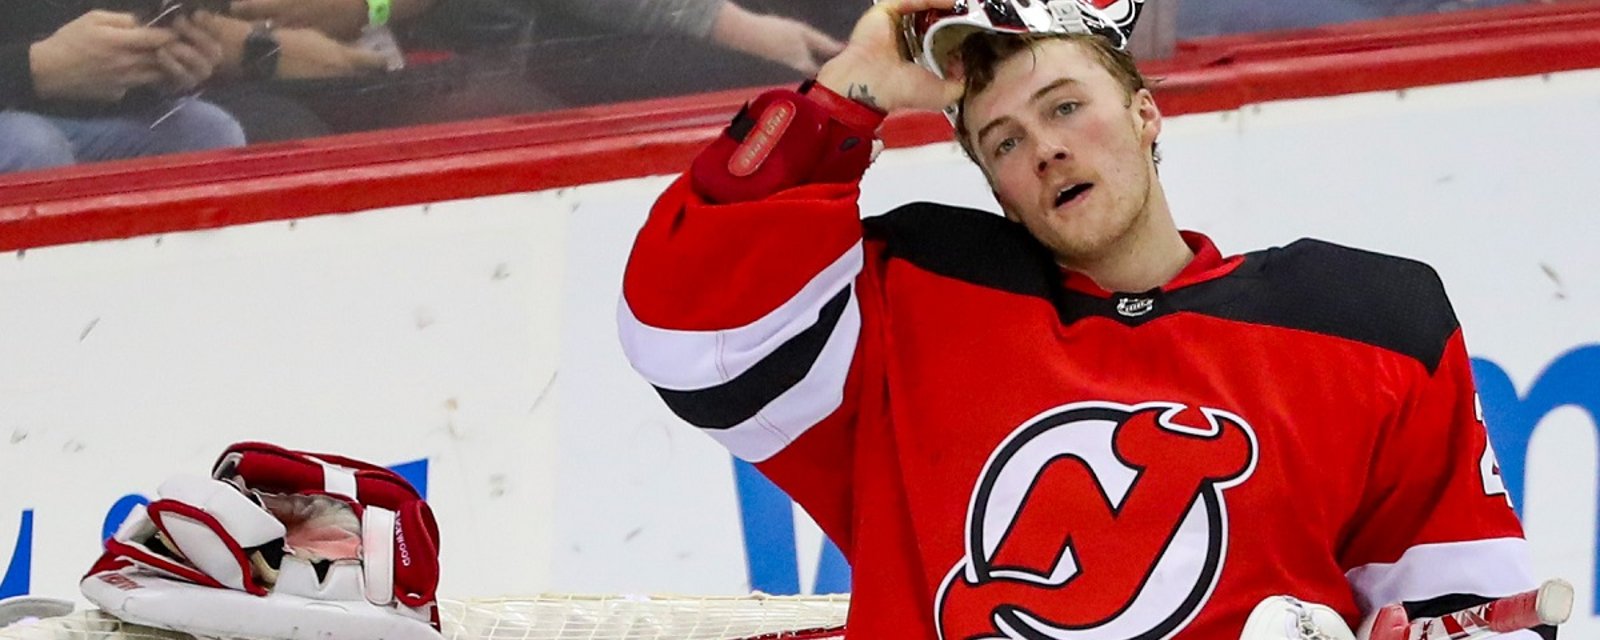 Bruins reporter suggests intentionally injuring Devils goaltender Mackenzie Blackwood.